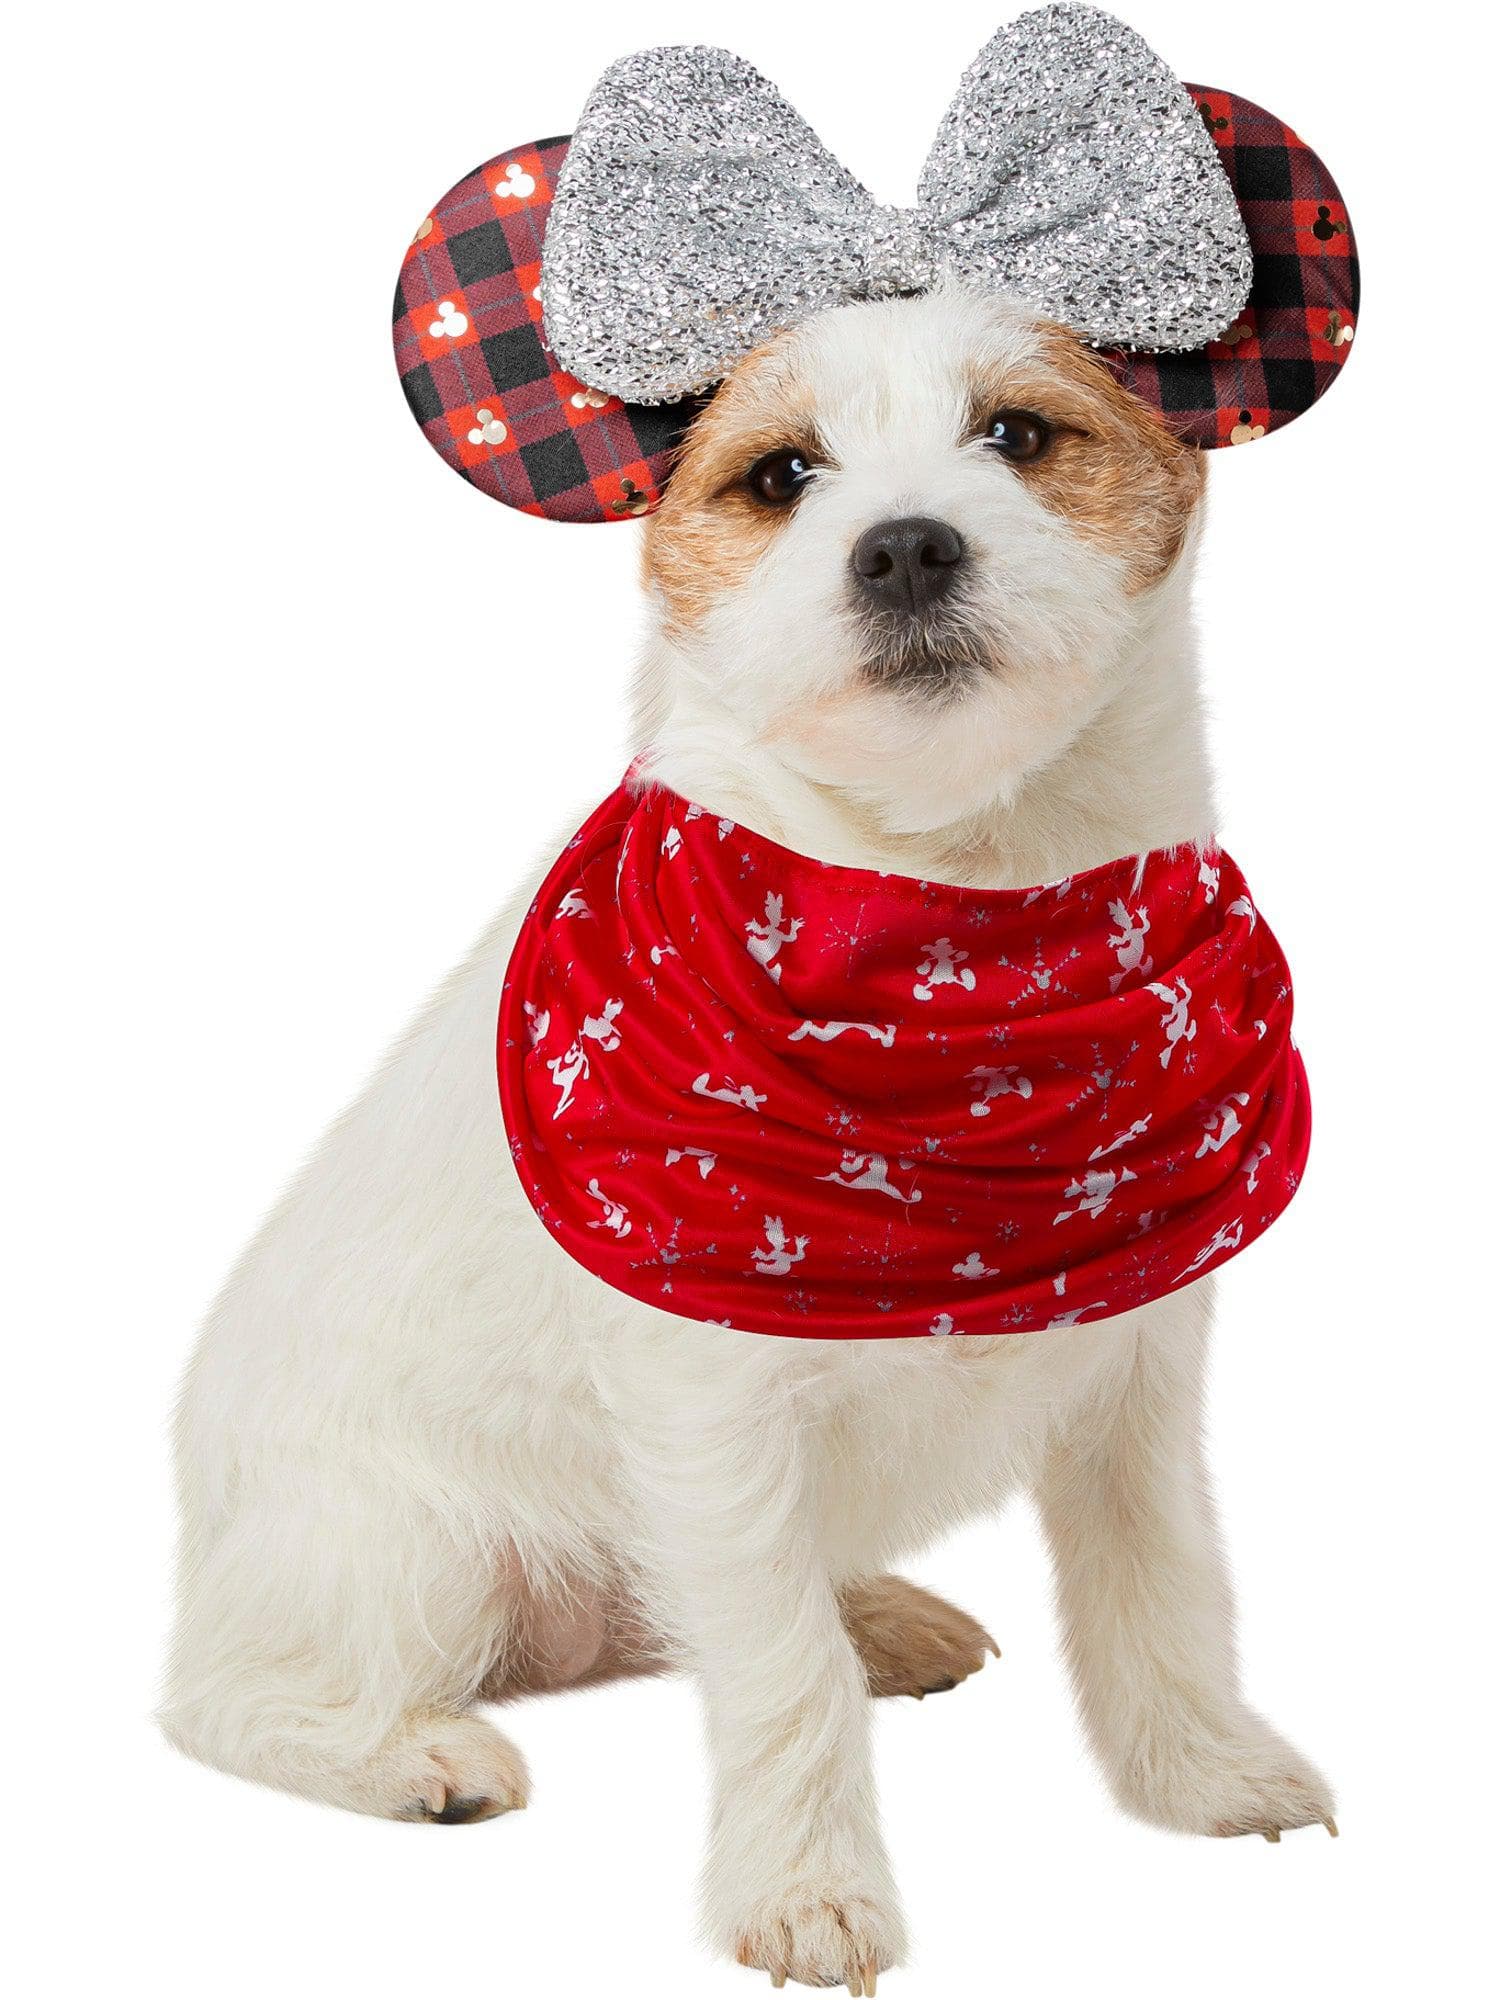 Minnie Mouse Holiday Pet Headpiece and Bandana - costumes.com